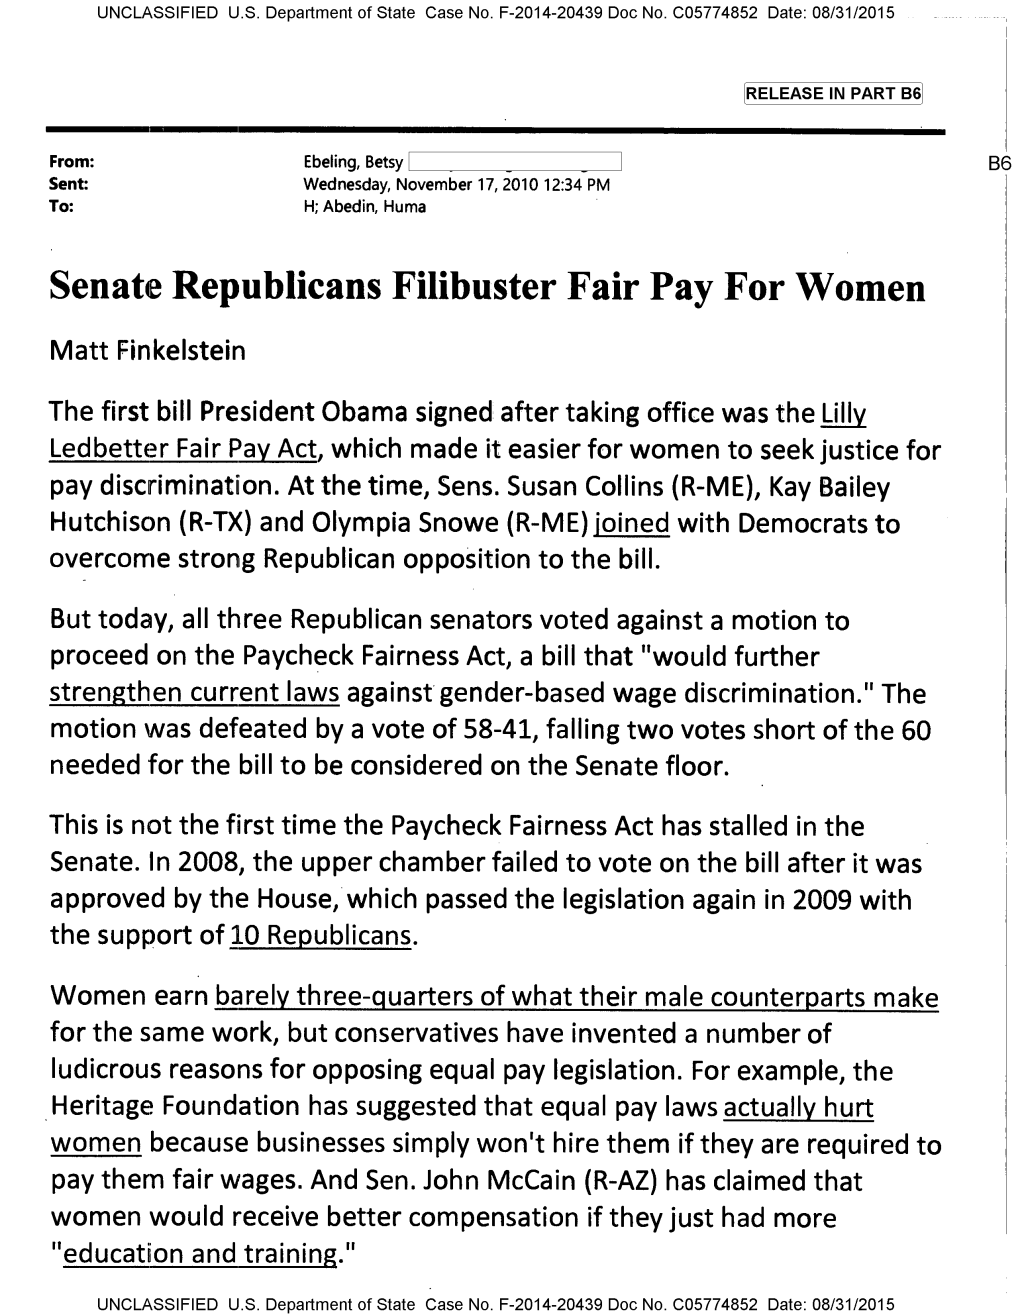 Senate Republicans Filibuster Fair Pay for Women